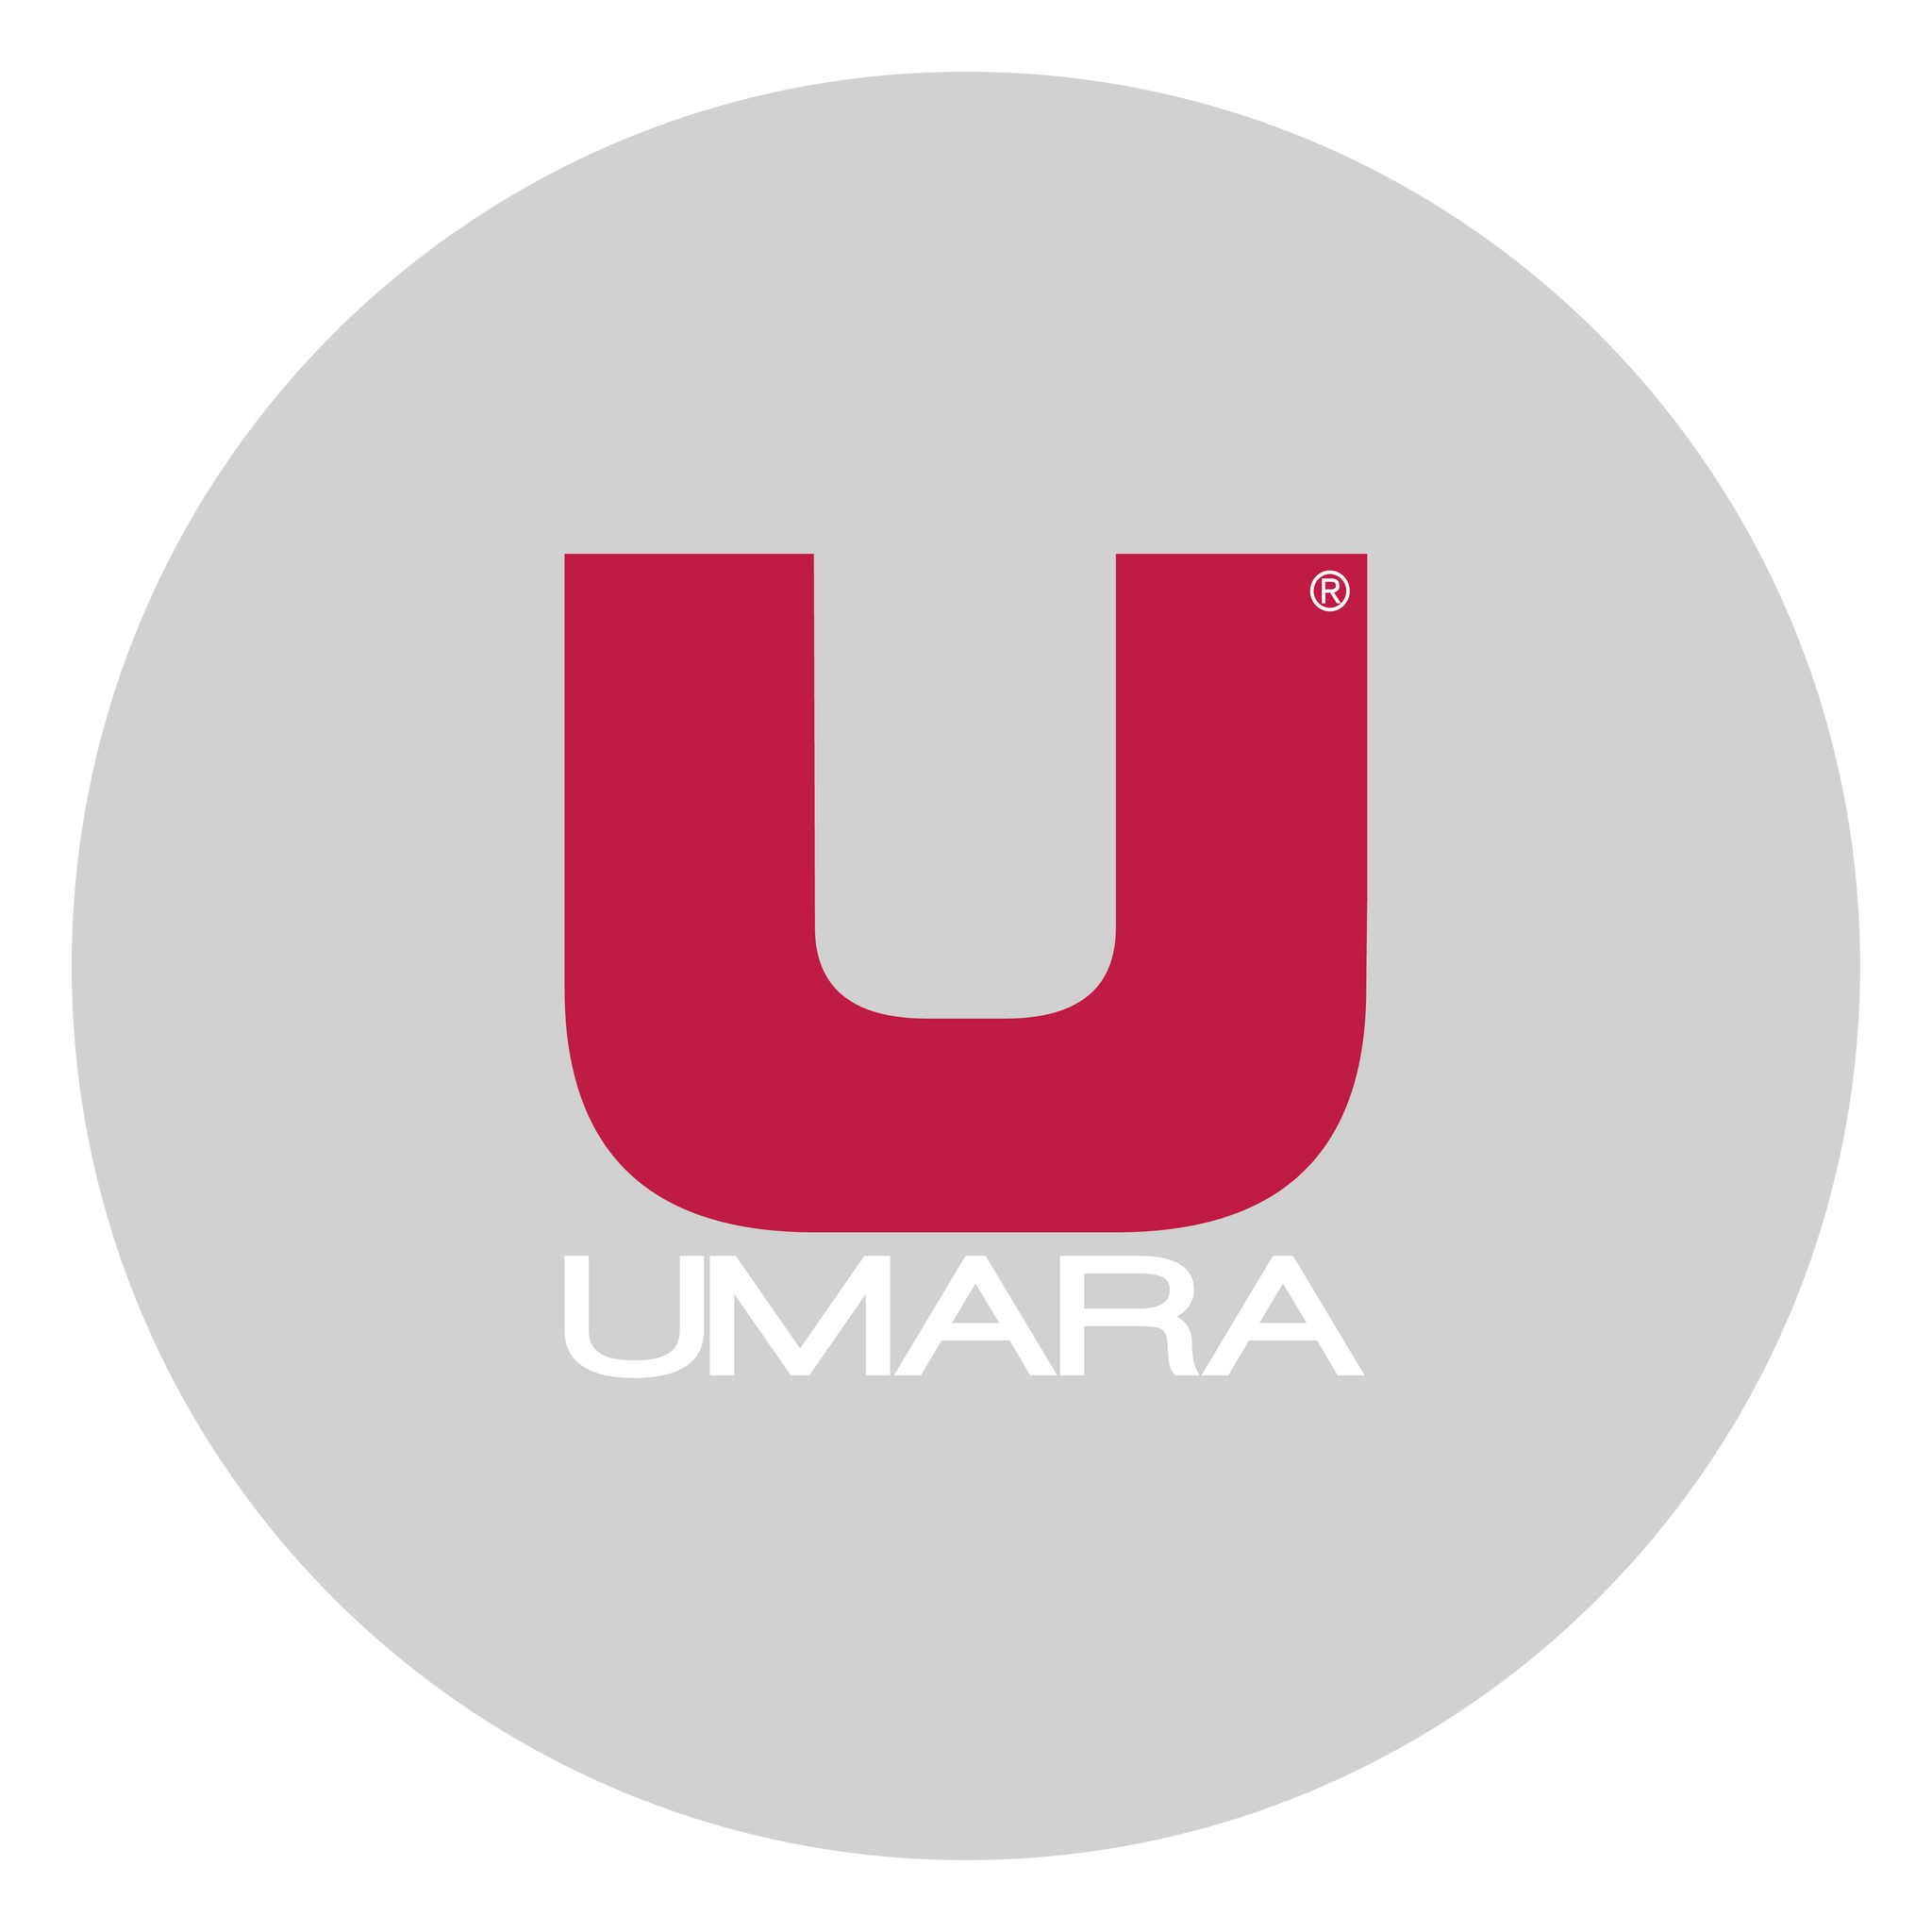 Umara Triathlon Half/Mid Distance Package